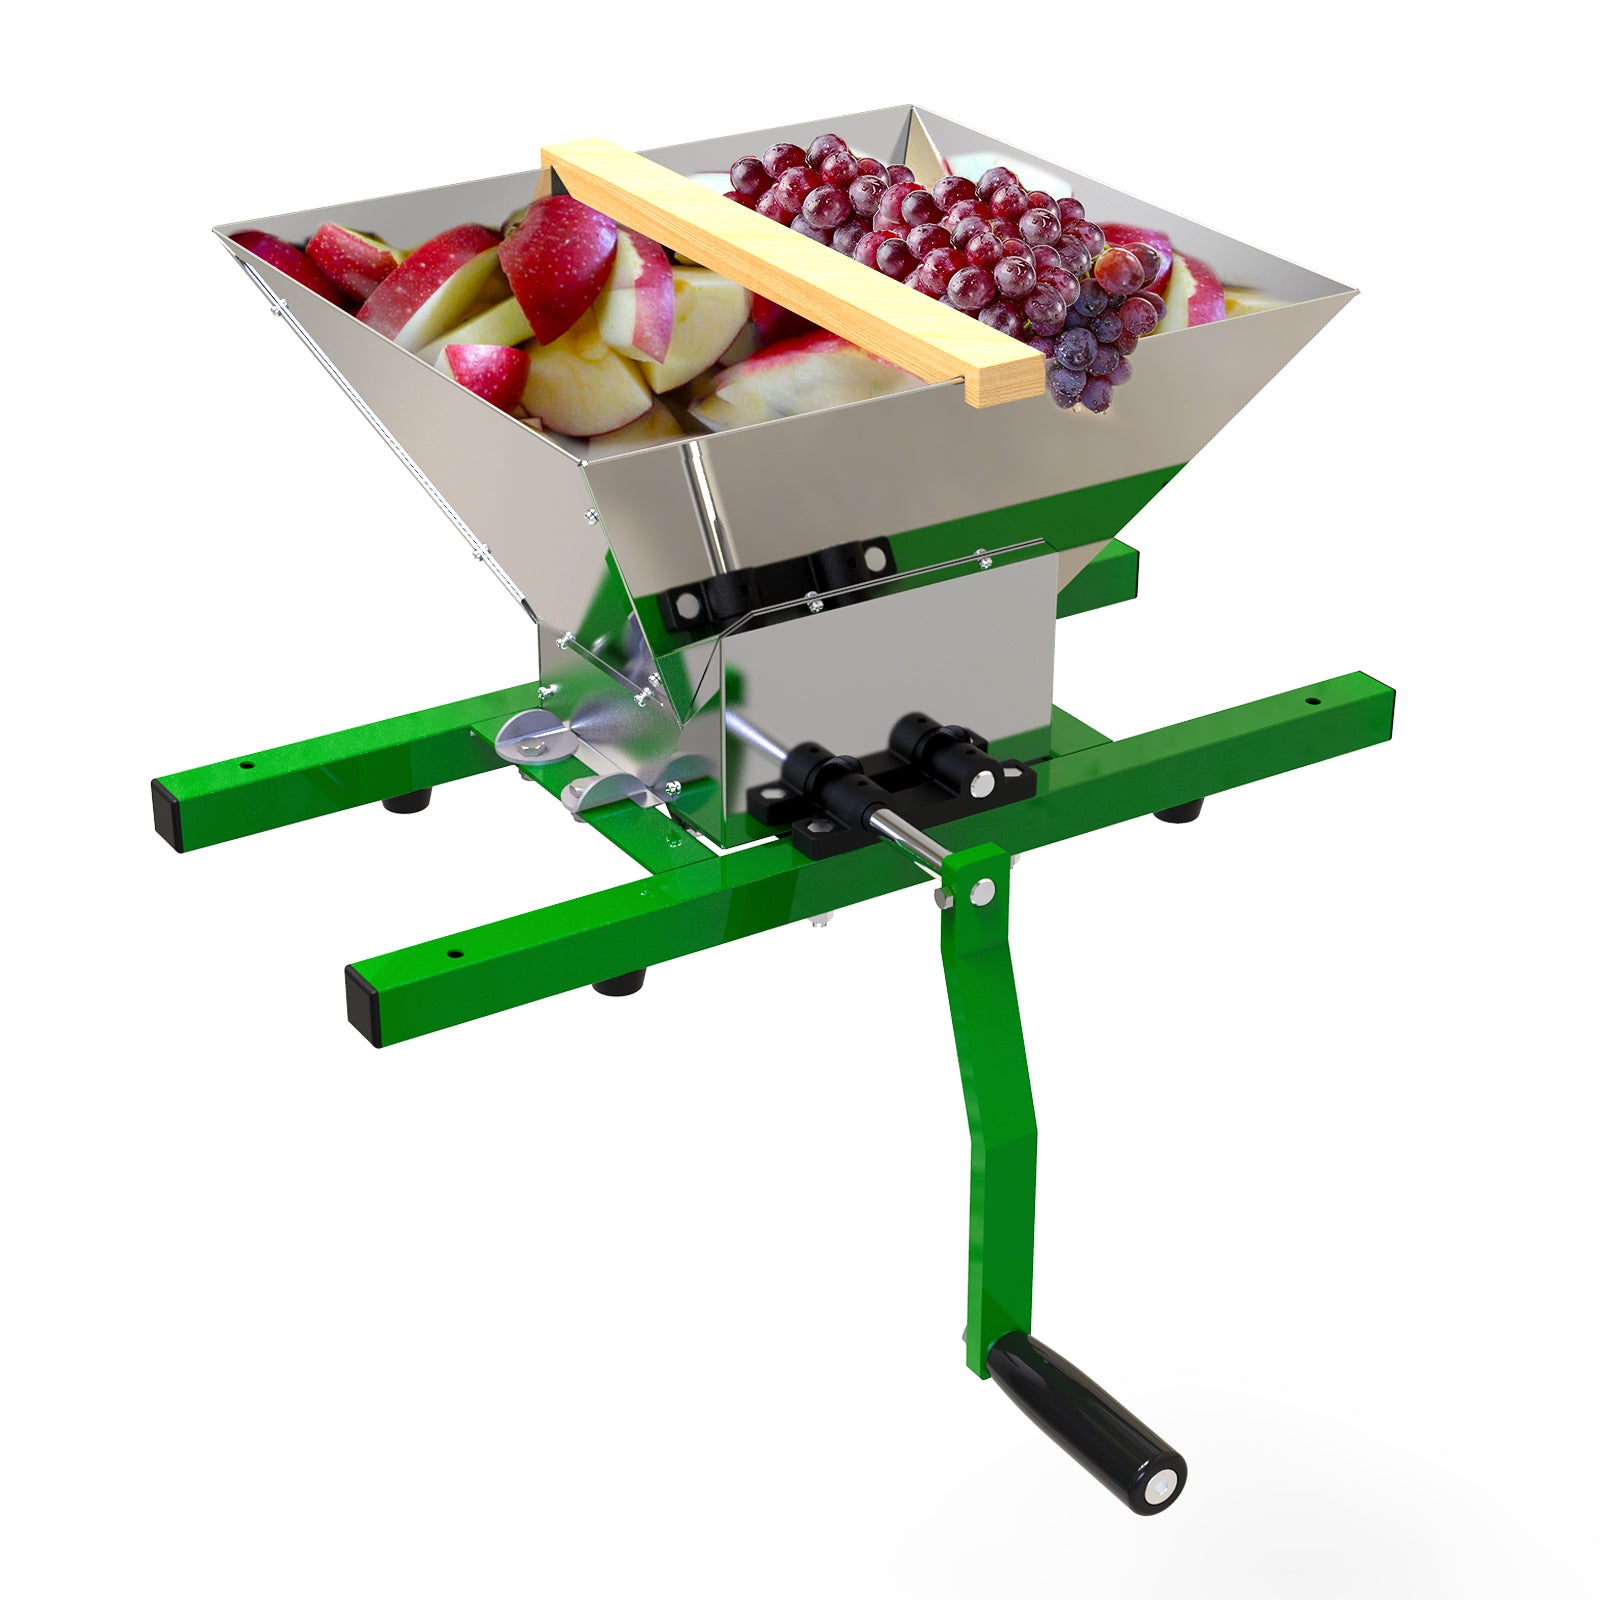 Fruit and Apple Crusher - 7L Manual Juicer Grinder(1.8 Gallon,Green)